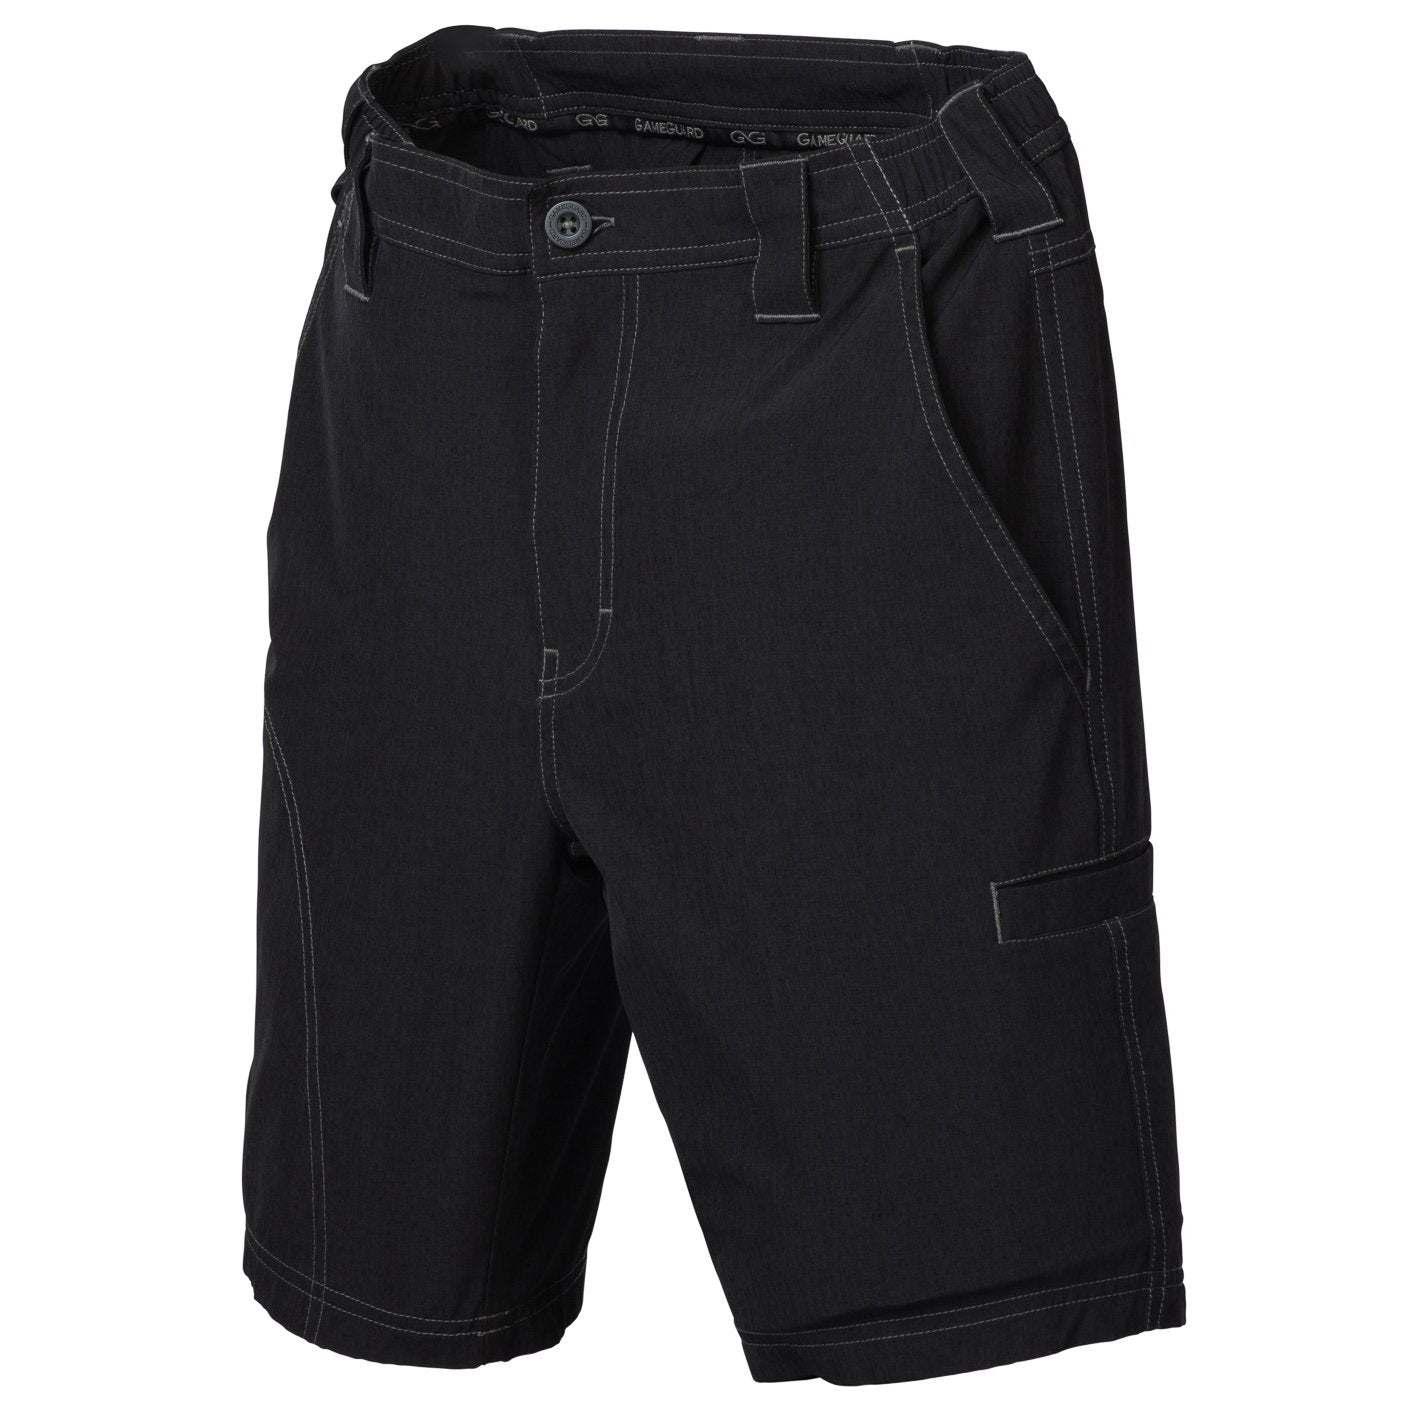 GameGuard Men's Charcoal Shorts